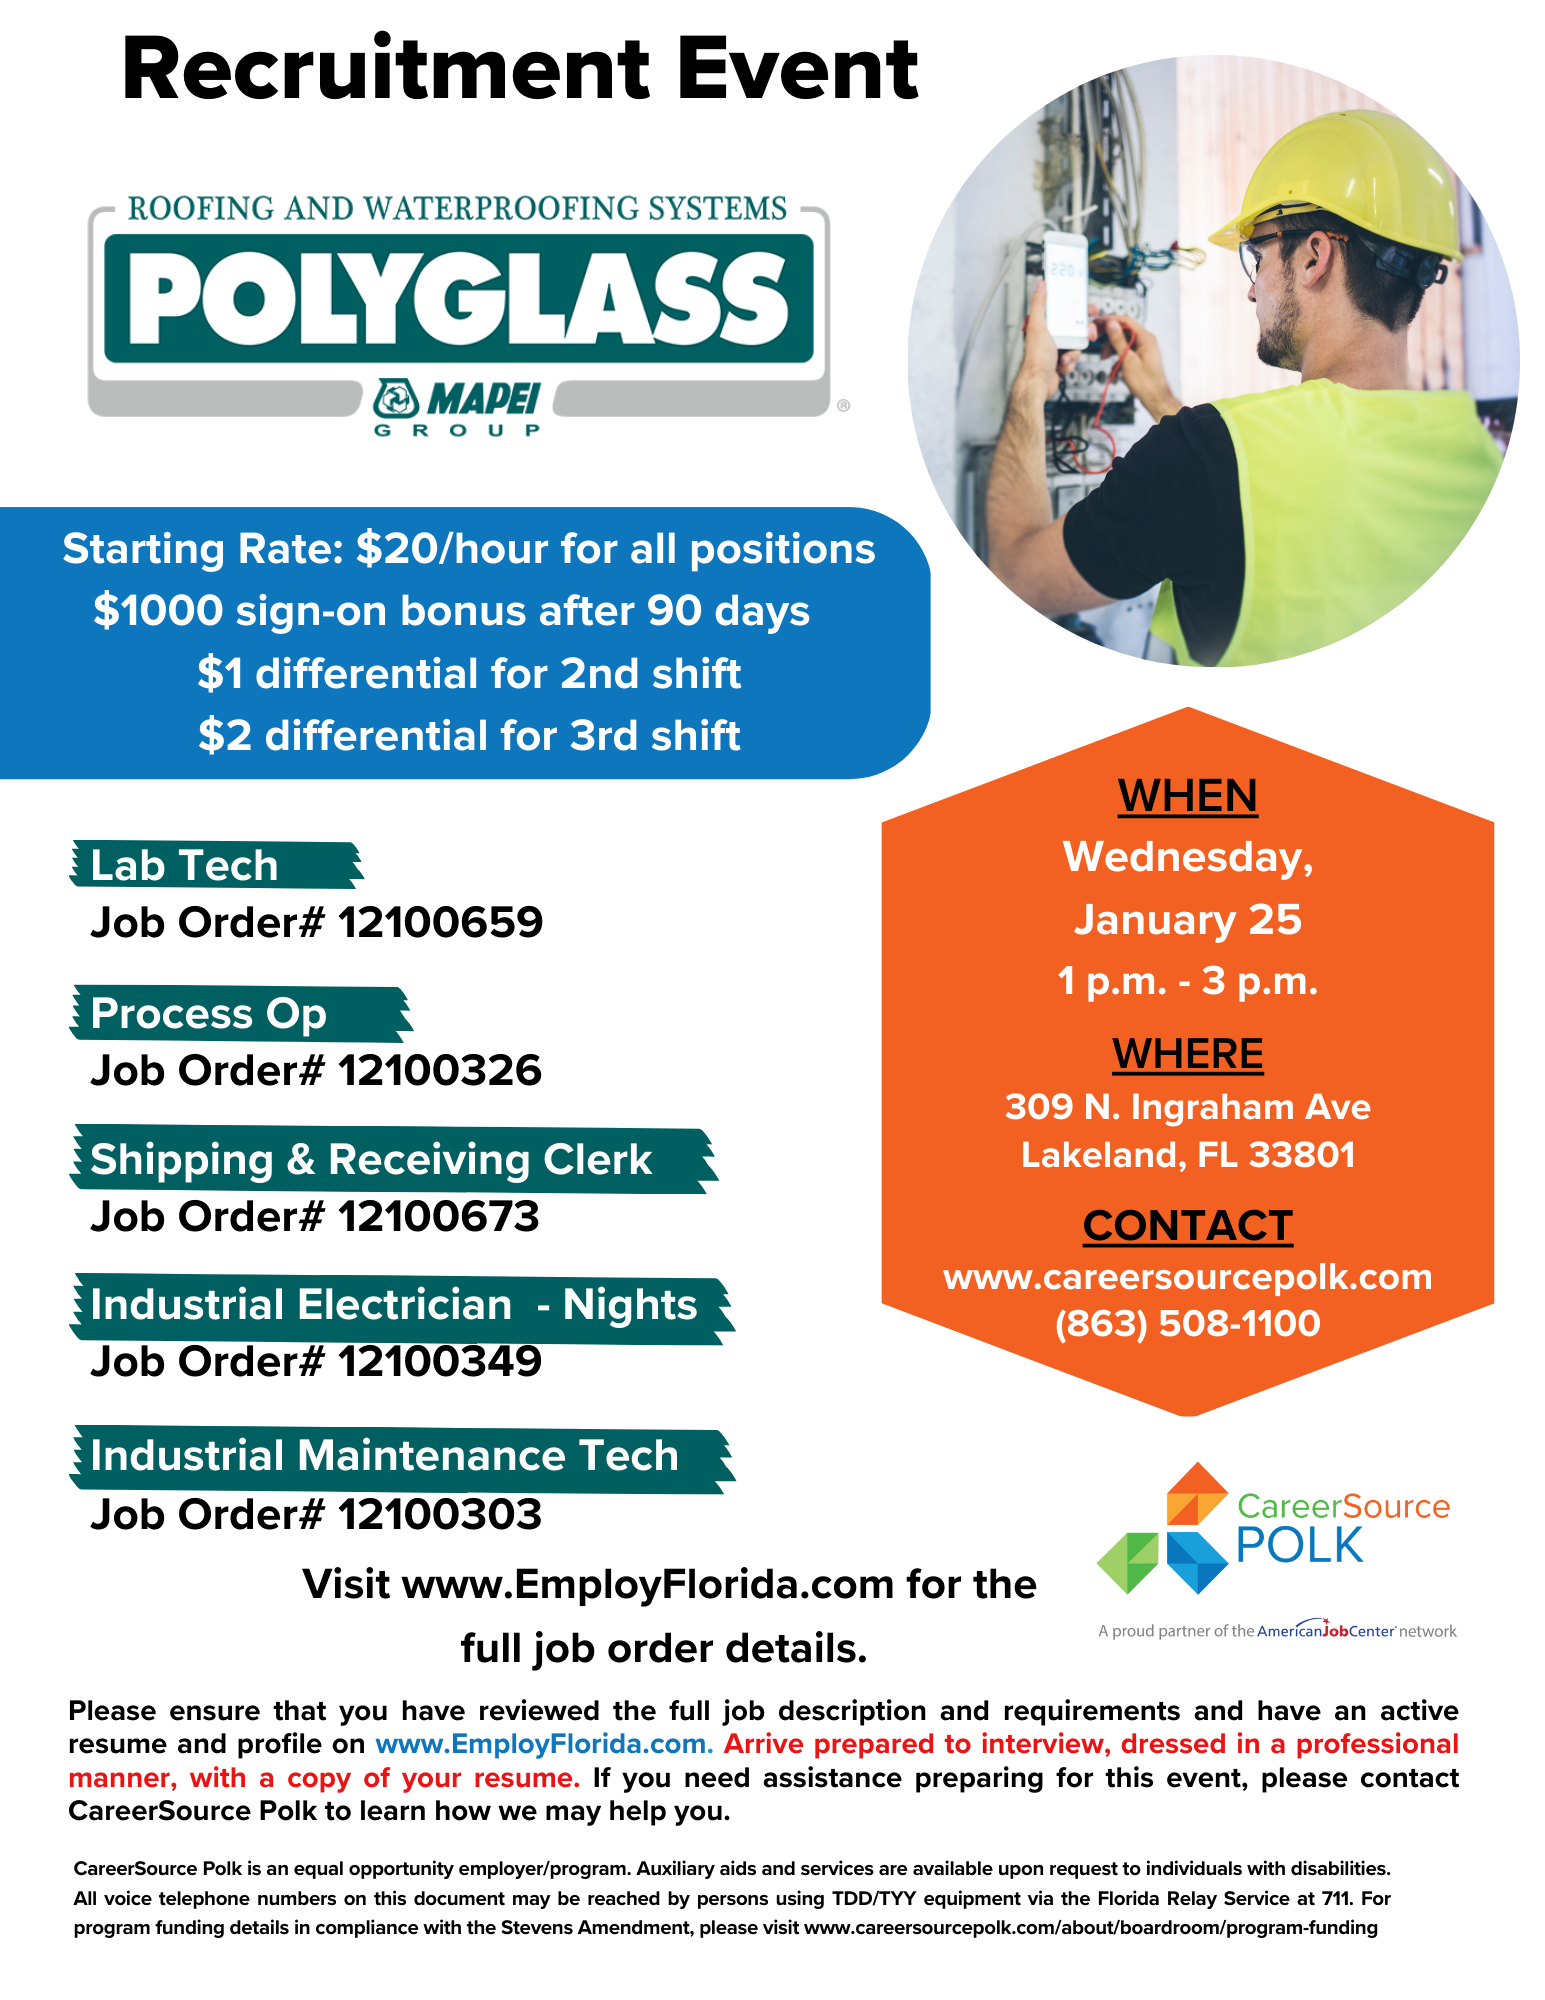 Polyglass hiring event